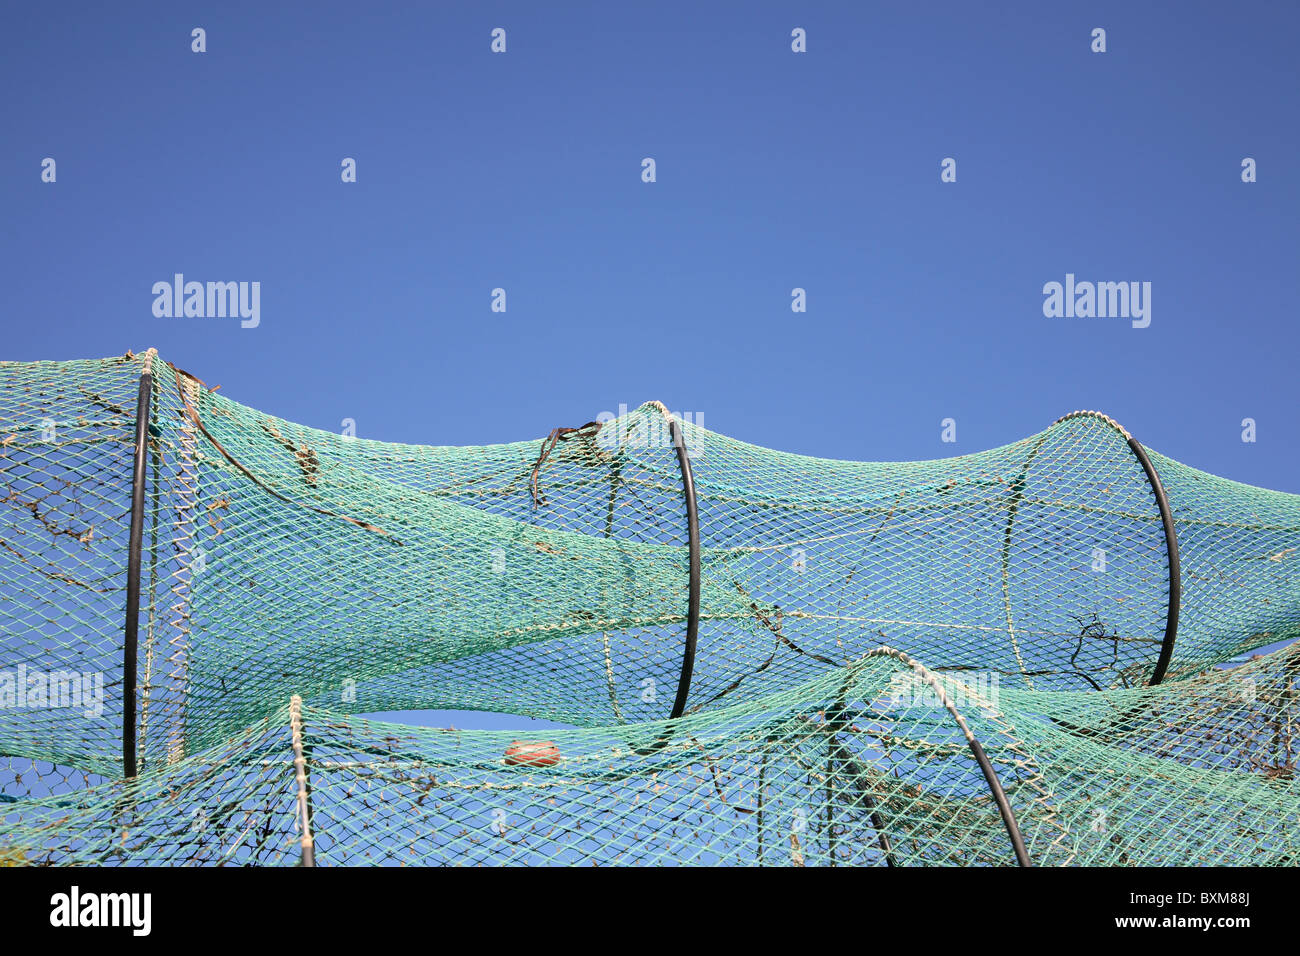 https://c8.alamy.com/comp/BXM88J/drying-fish-trap-nets-on-drying-ground-against-a-blue-sky-BXM88J.jpg